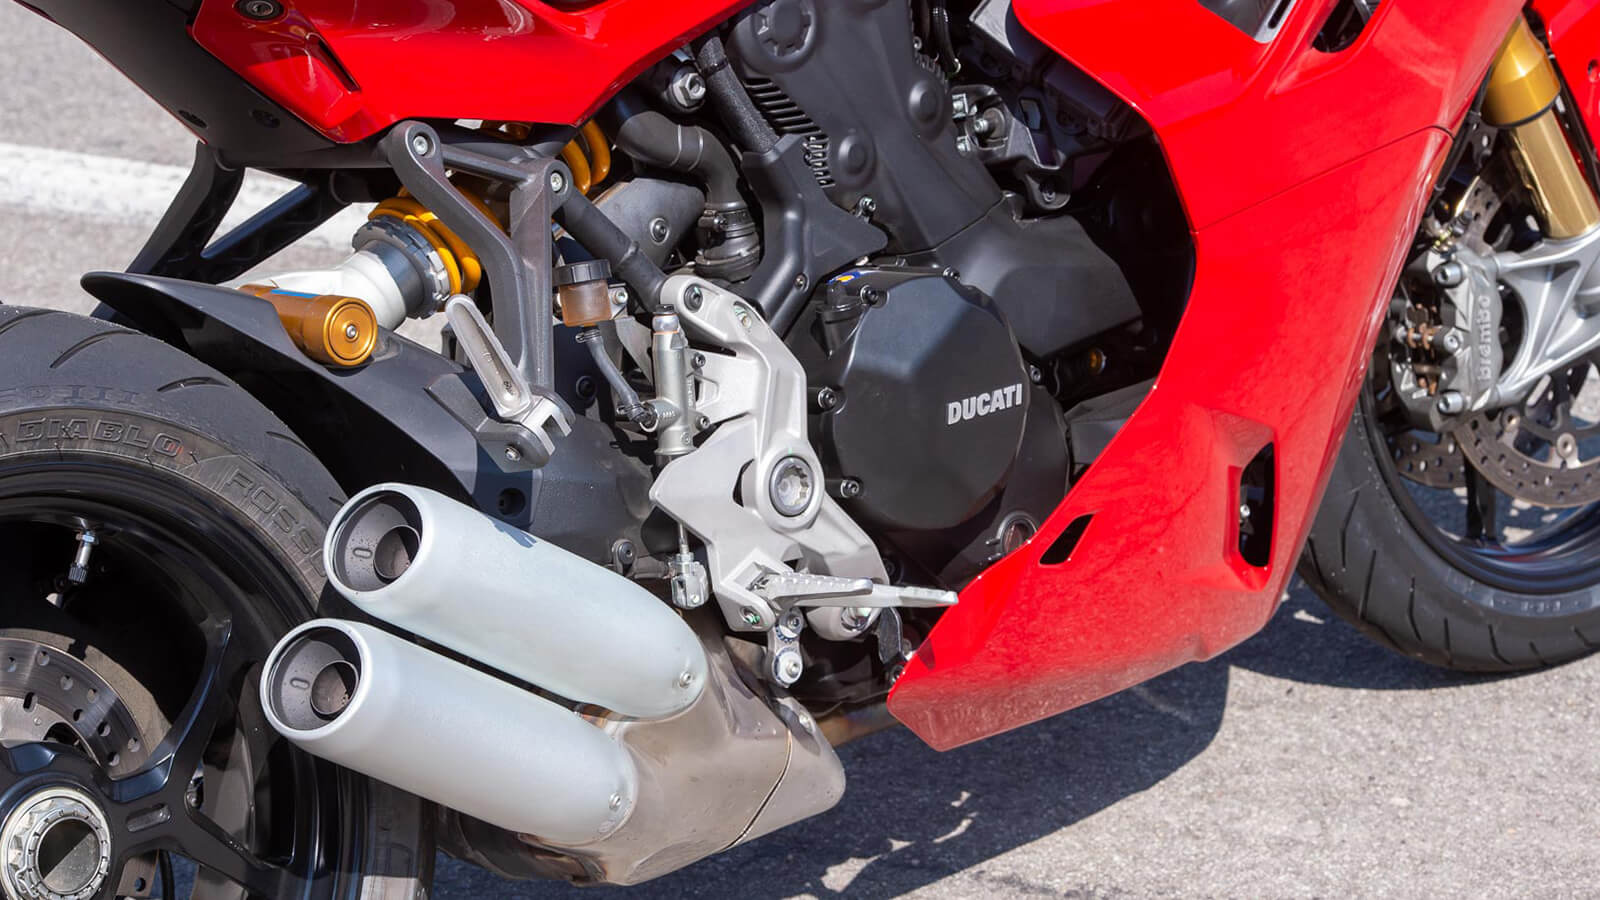  Ducati Supersport 950 S